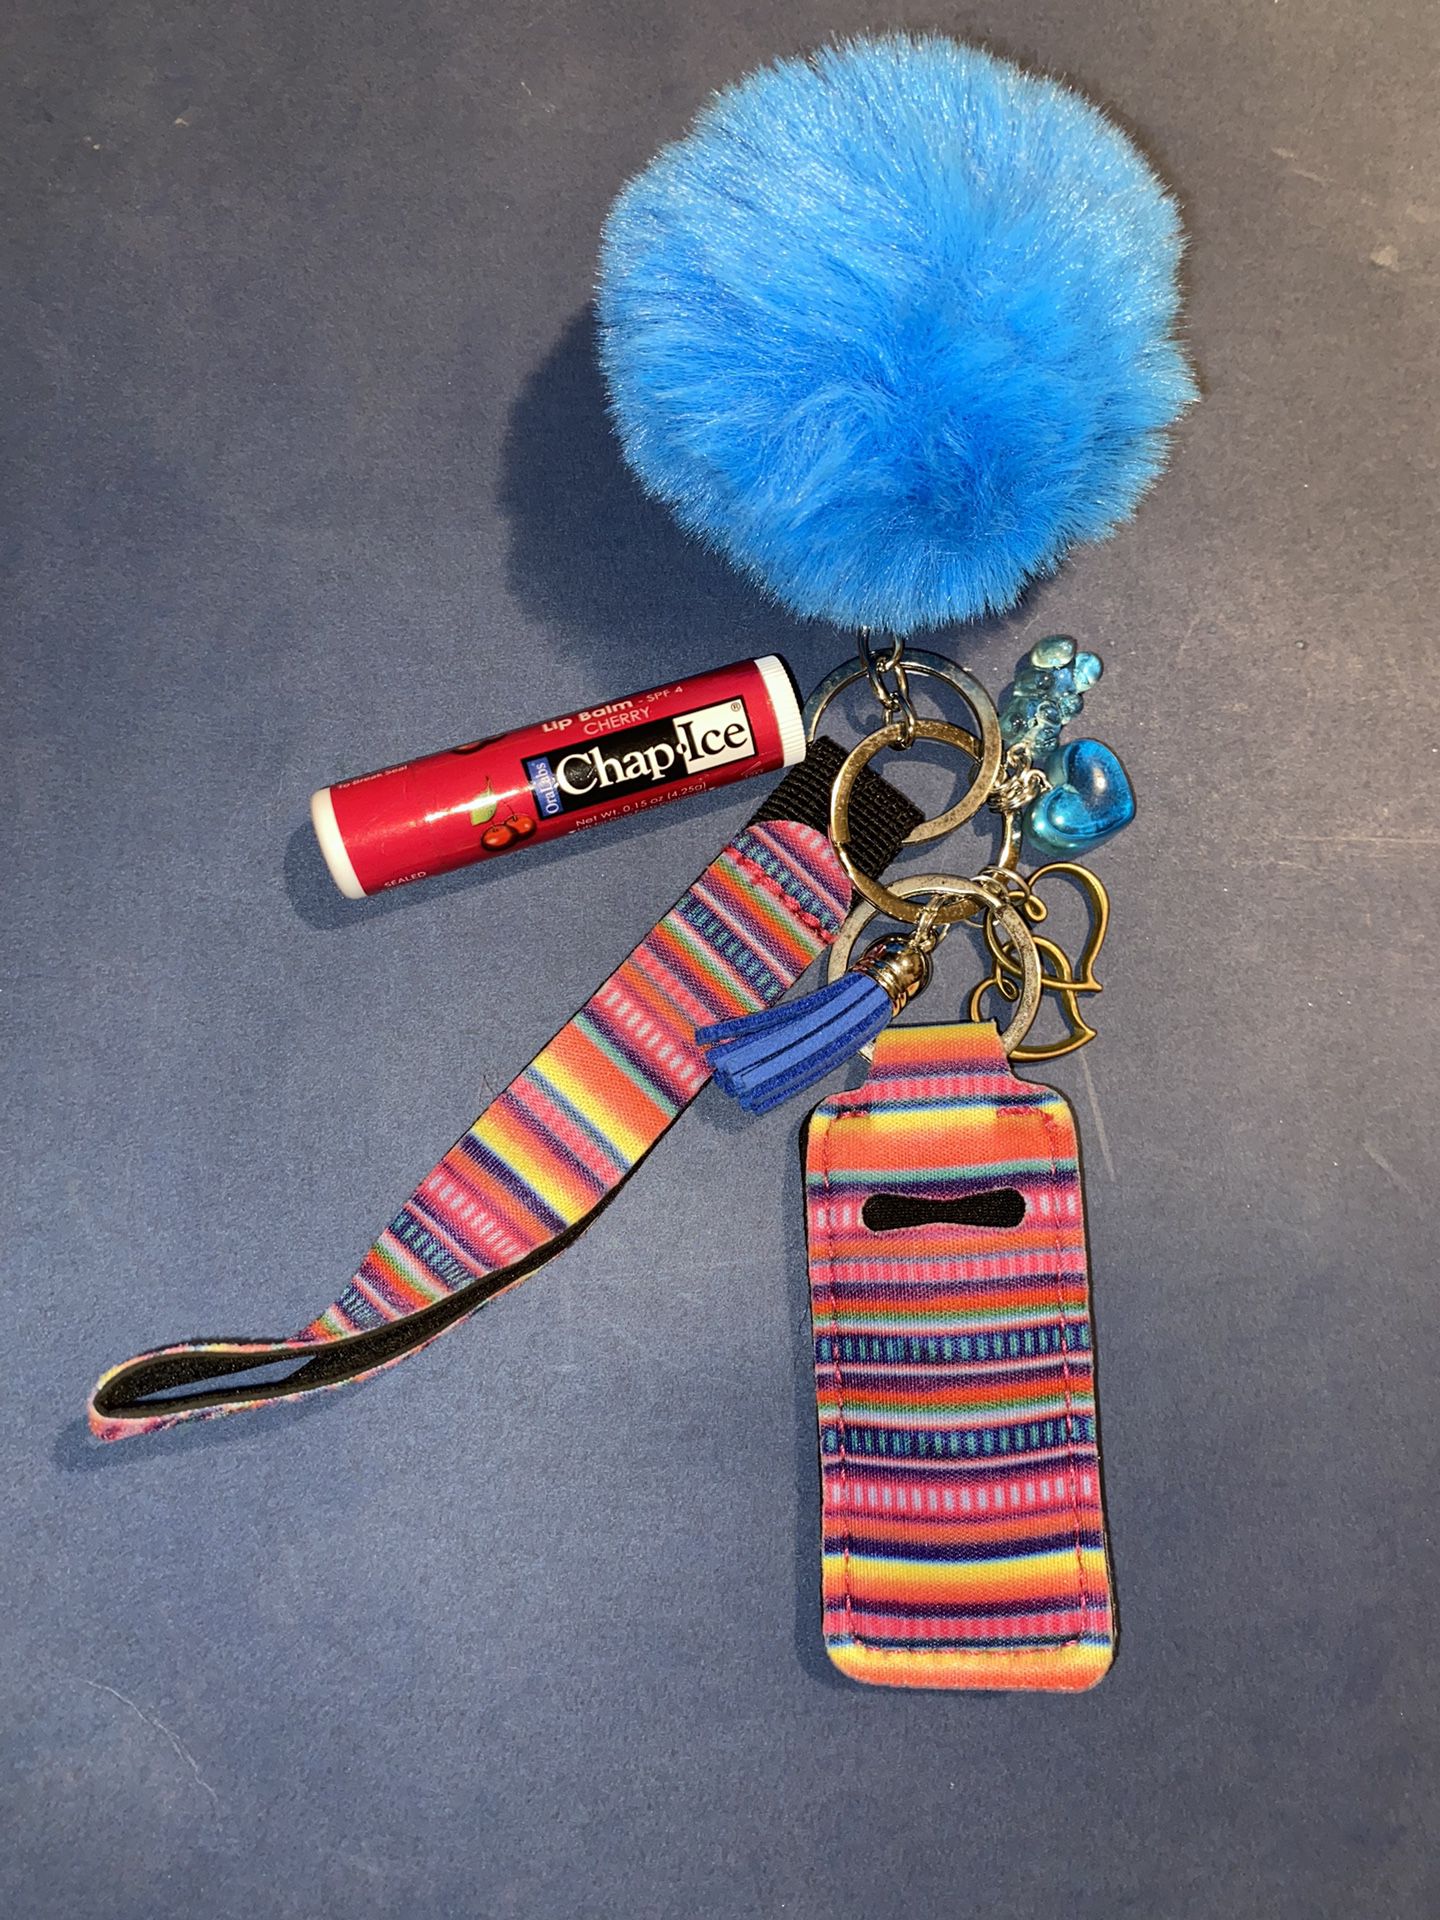 $10 chap stick holder keychain for Sale in San Antonio, TX - OfferUp